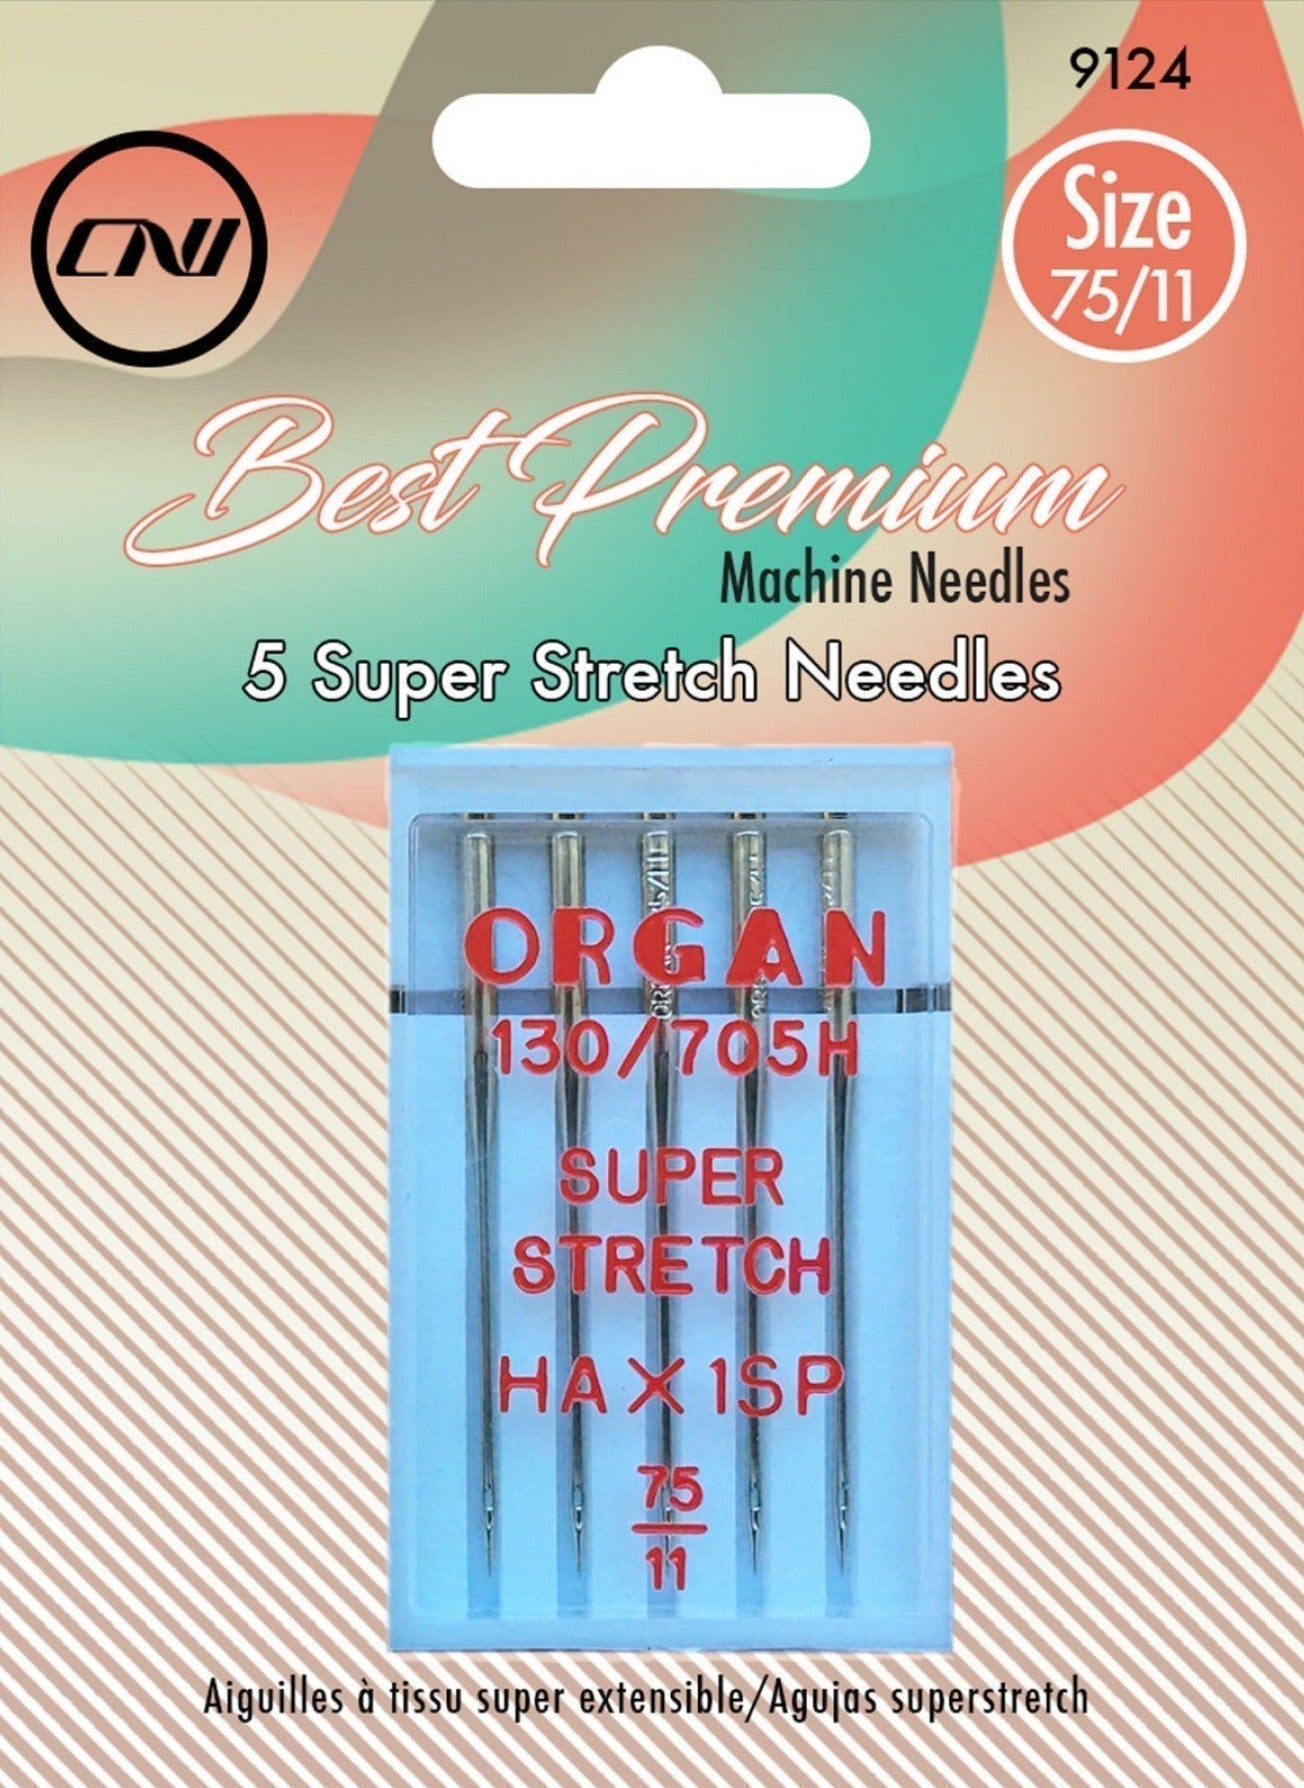 Organ Machine Needles | Super Stretch